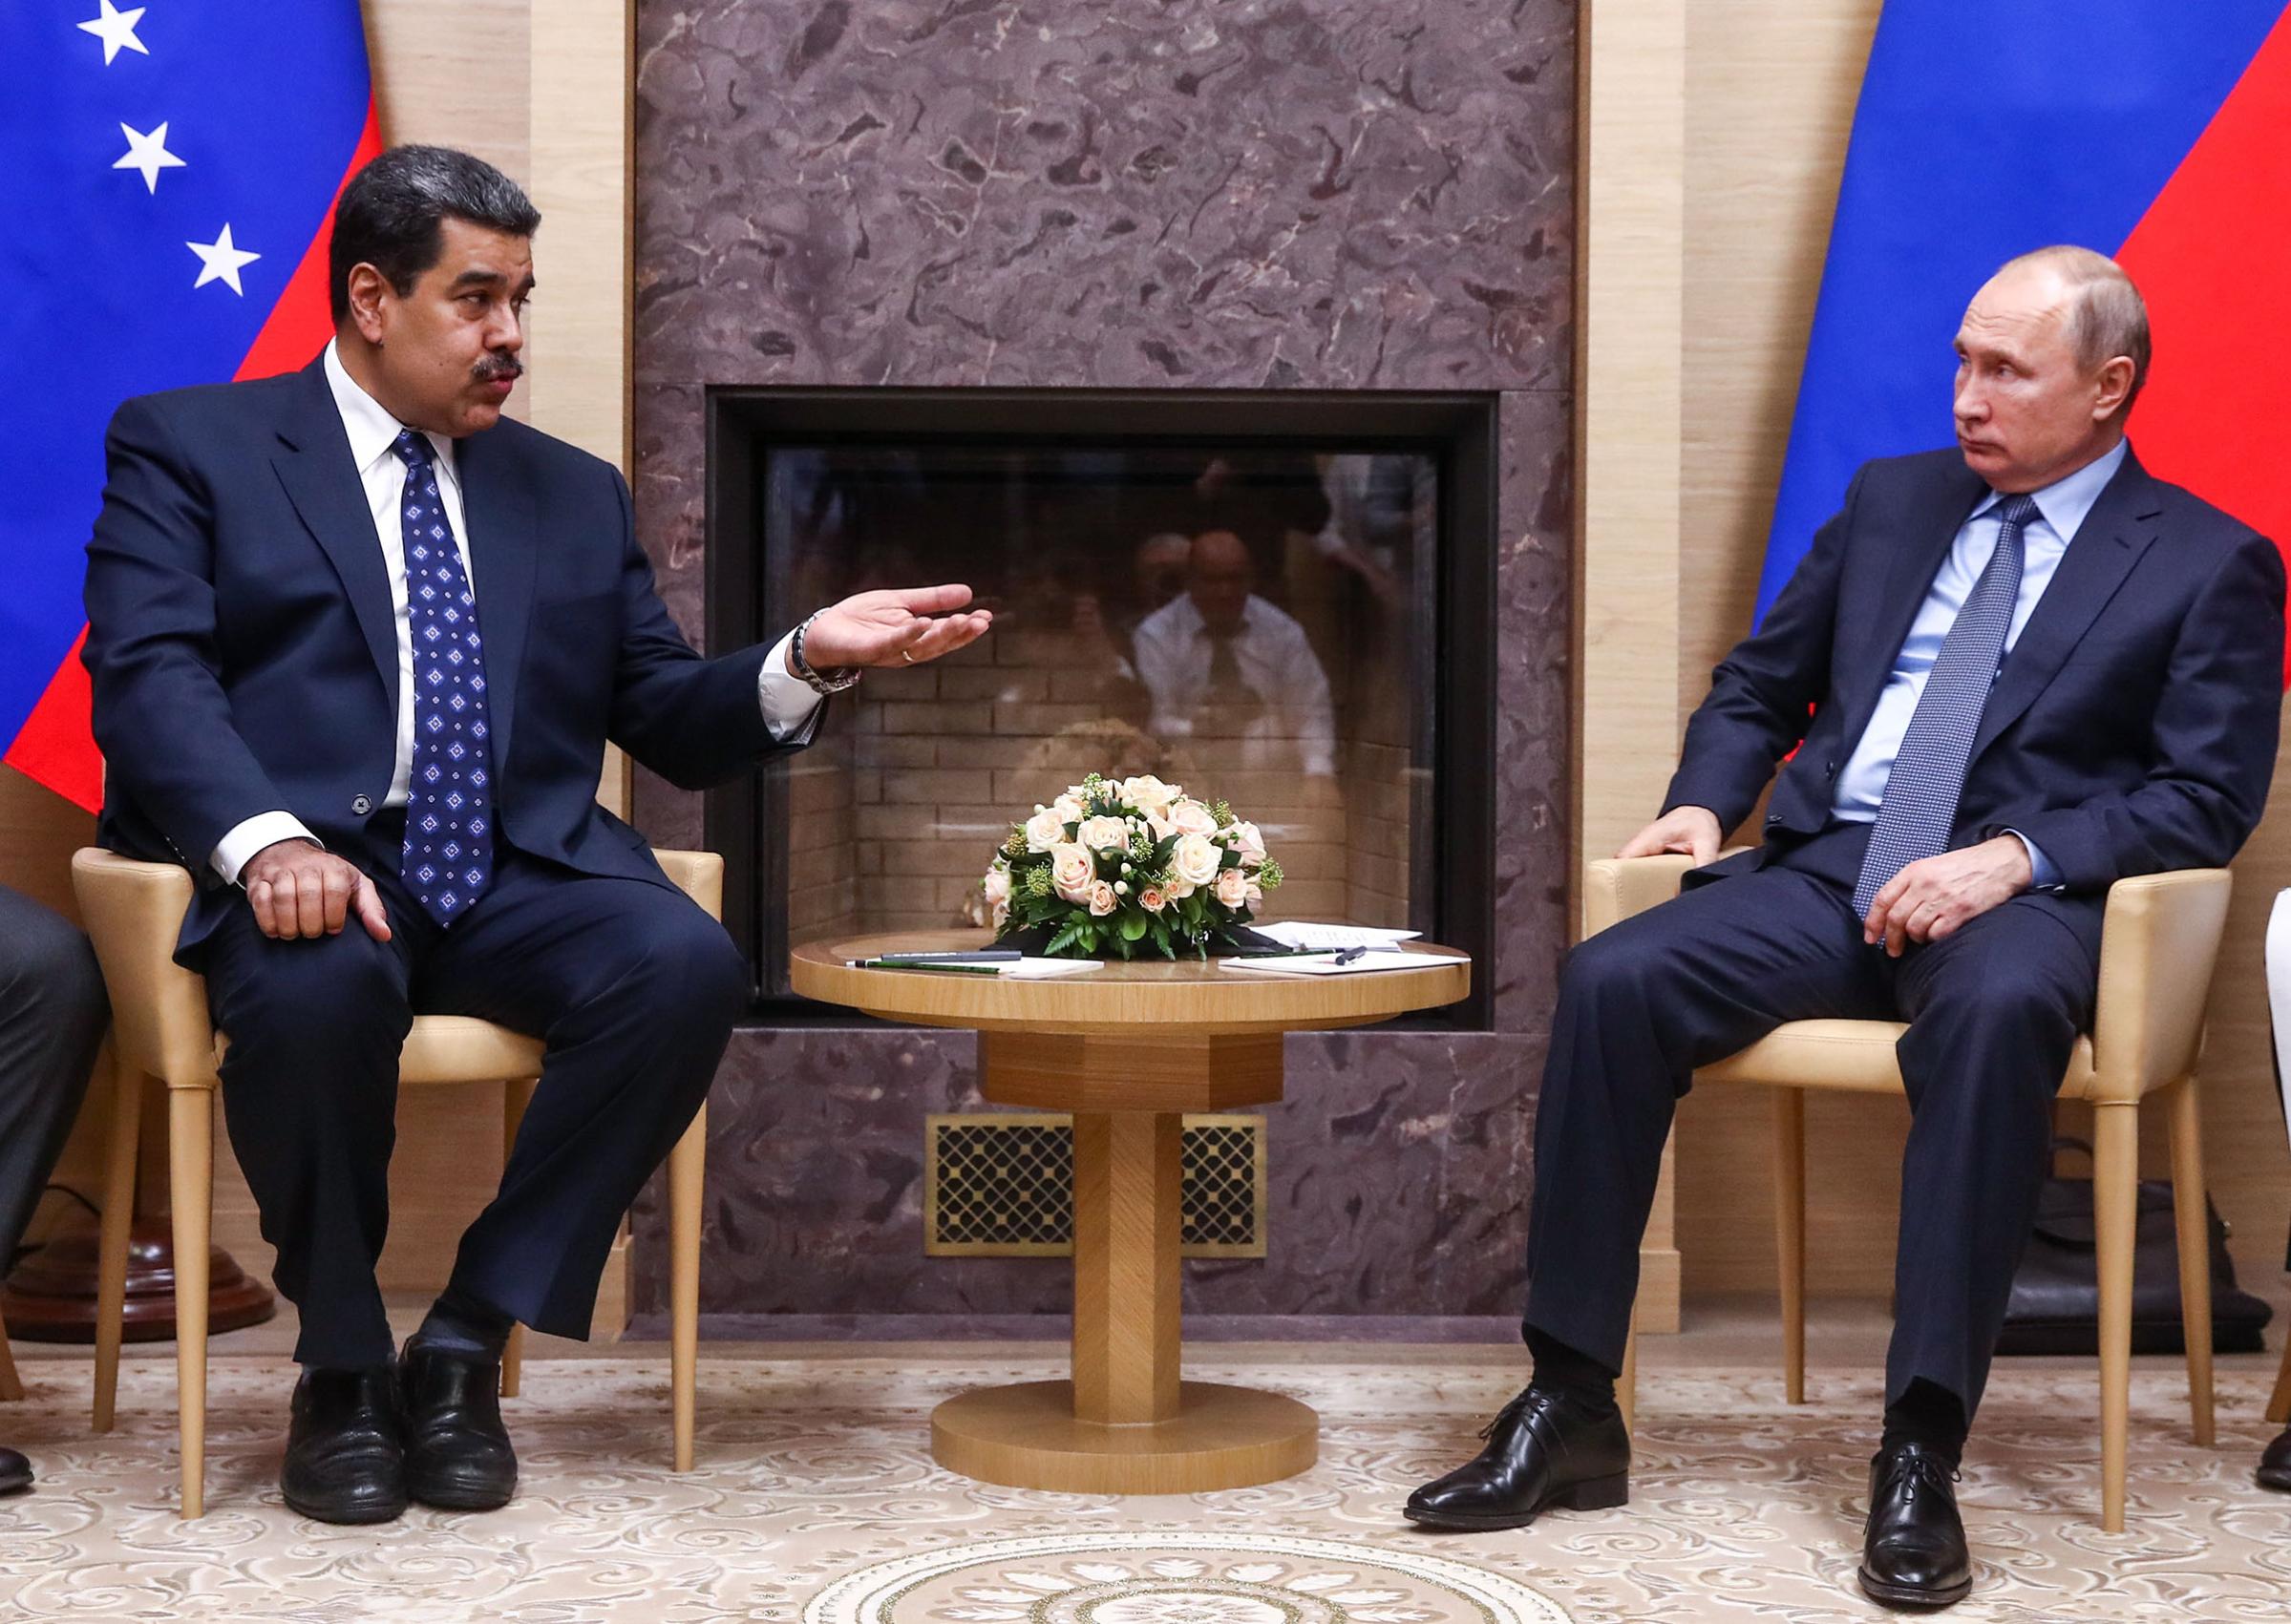 Venezuelan President Nicolas Maduro with Putin on Dec. 5. He visited Russia to seek financial aid